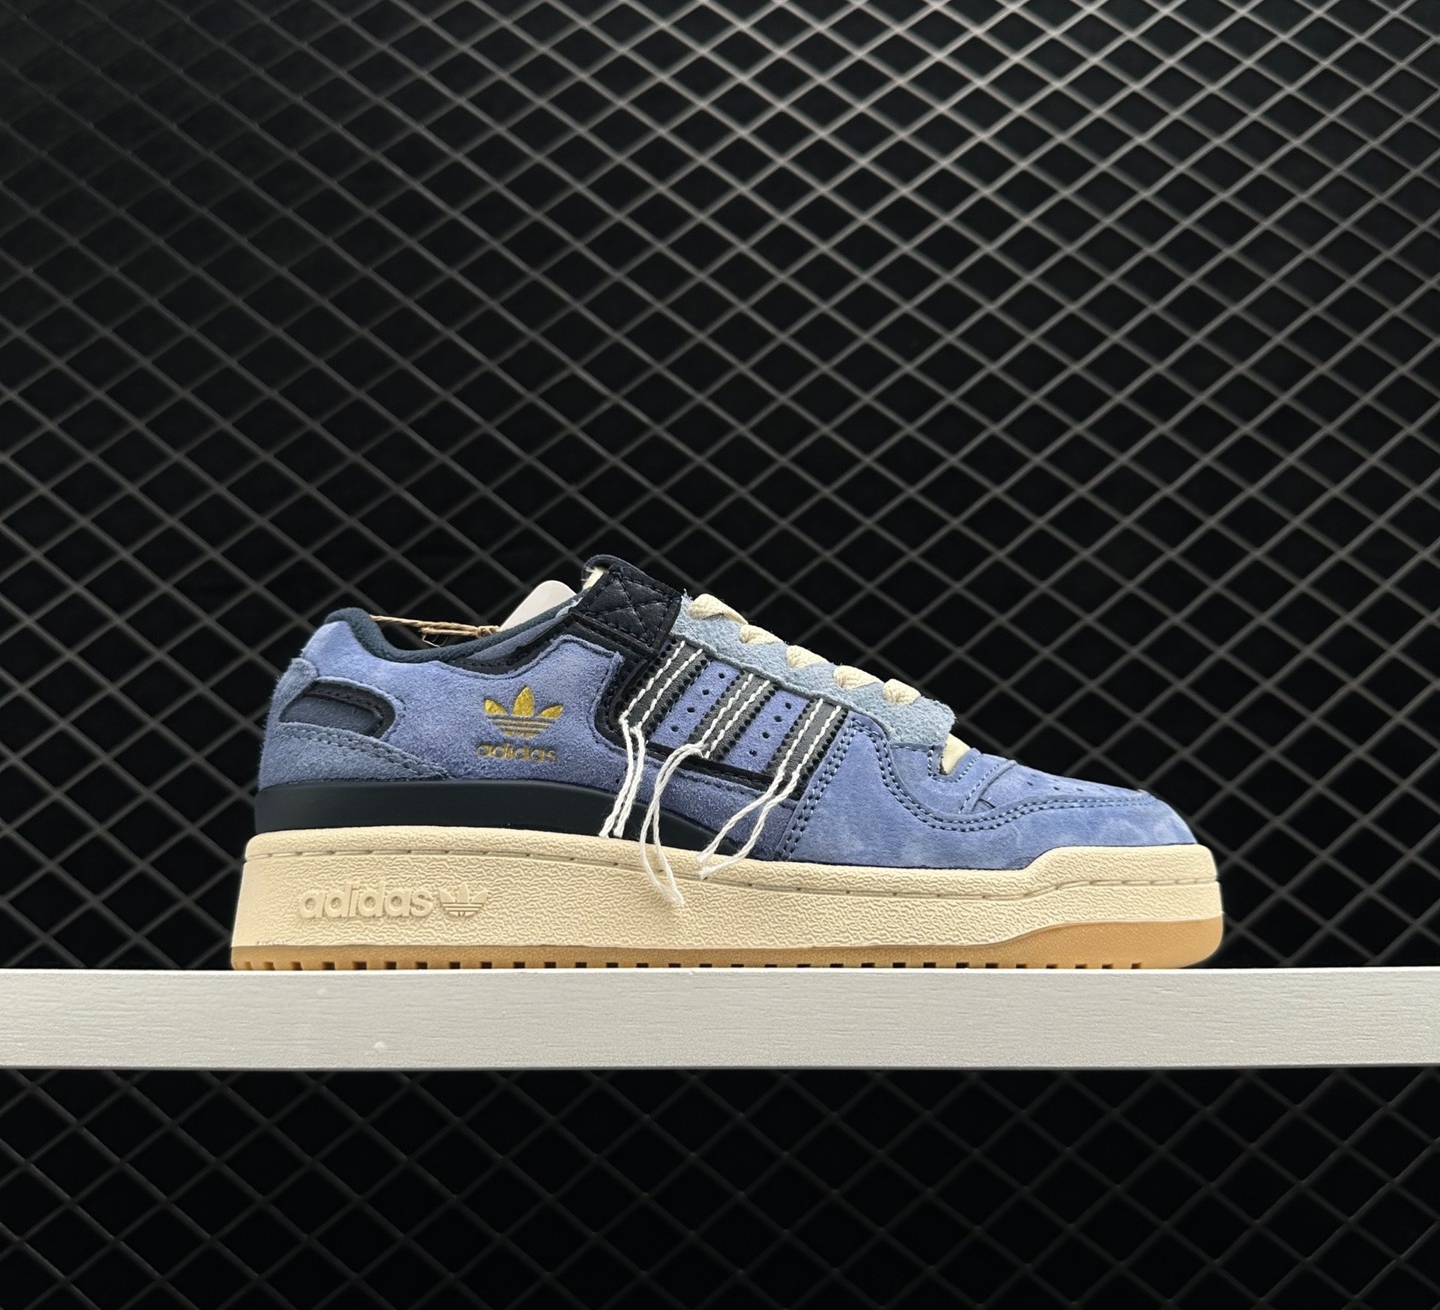 Adidas Originals Forum 84 Low Blue GW0298 - Stylish and Versatile Sneakers